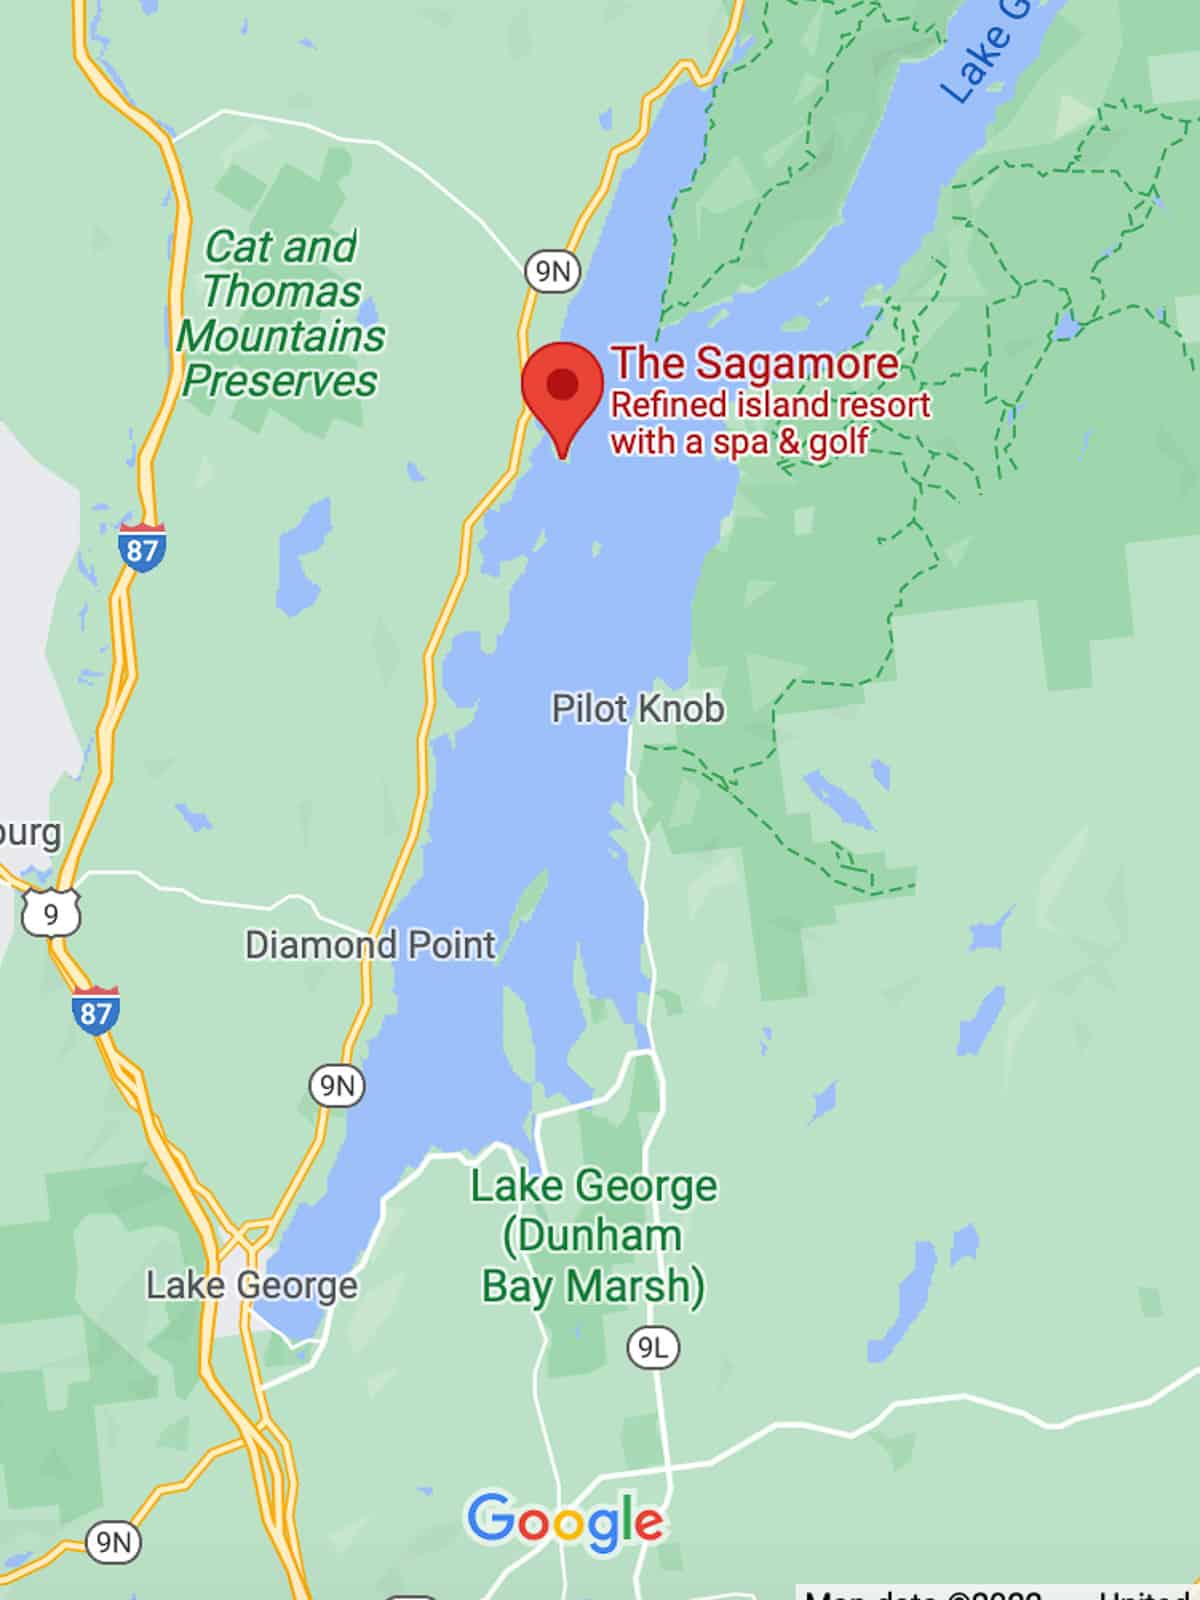 google map image of sagamore resort location